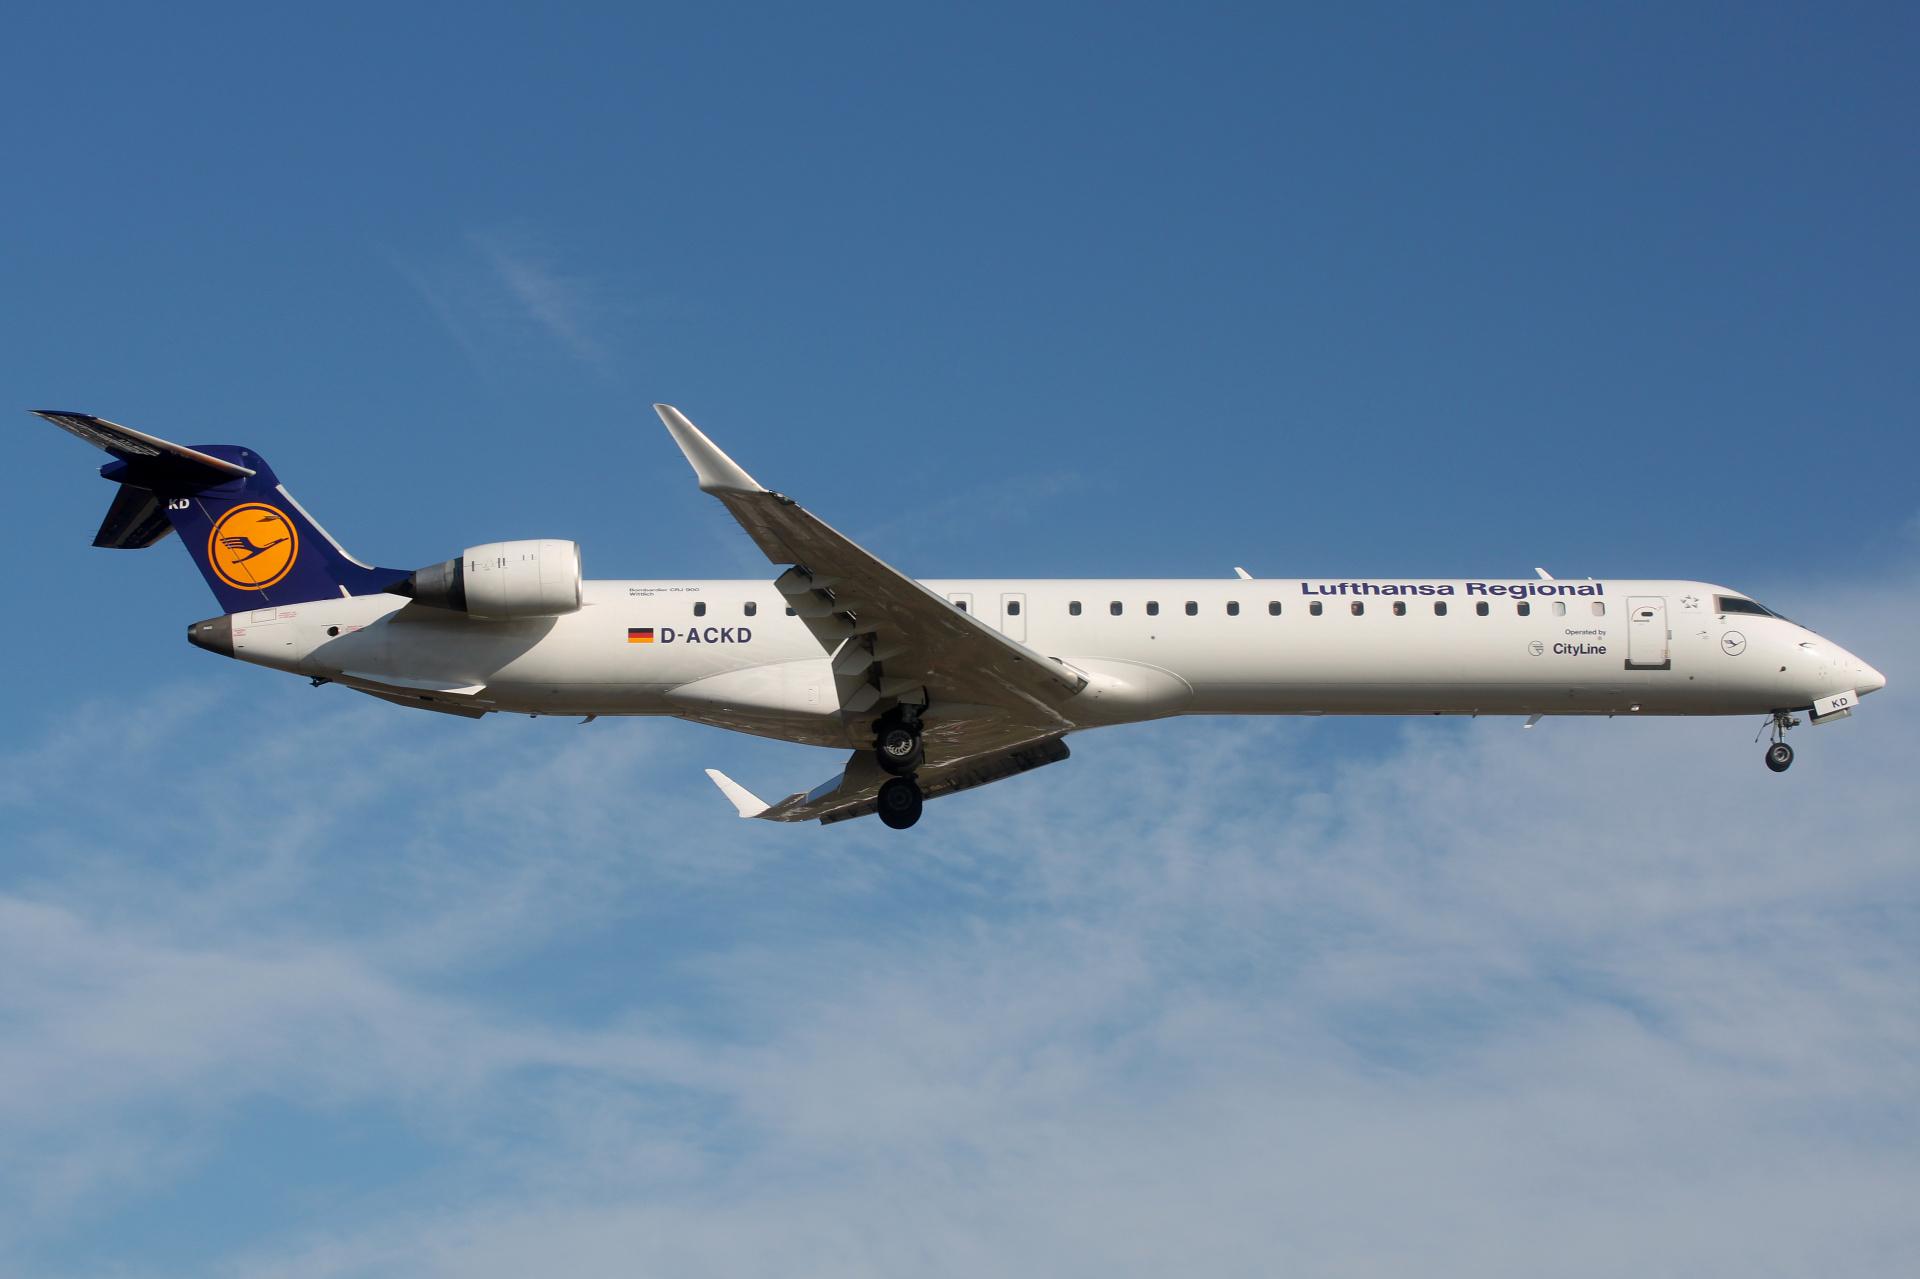 D-ACKD, Lufthansa Regional (CityLine) (Aircraft » EPWA Spotting » Mitsubishi Regional Jet » CRJ-900)